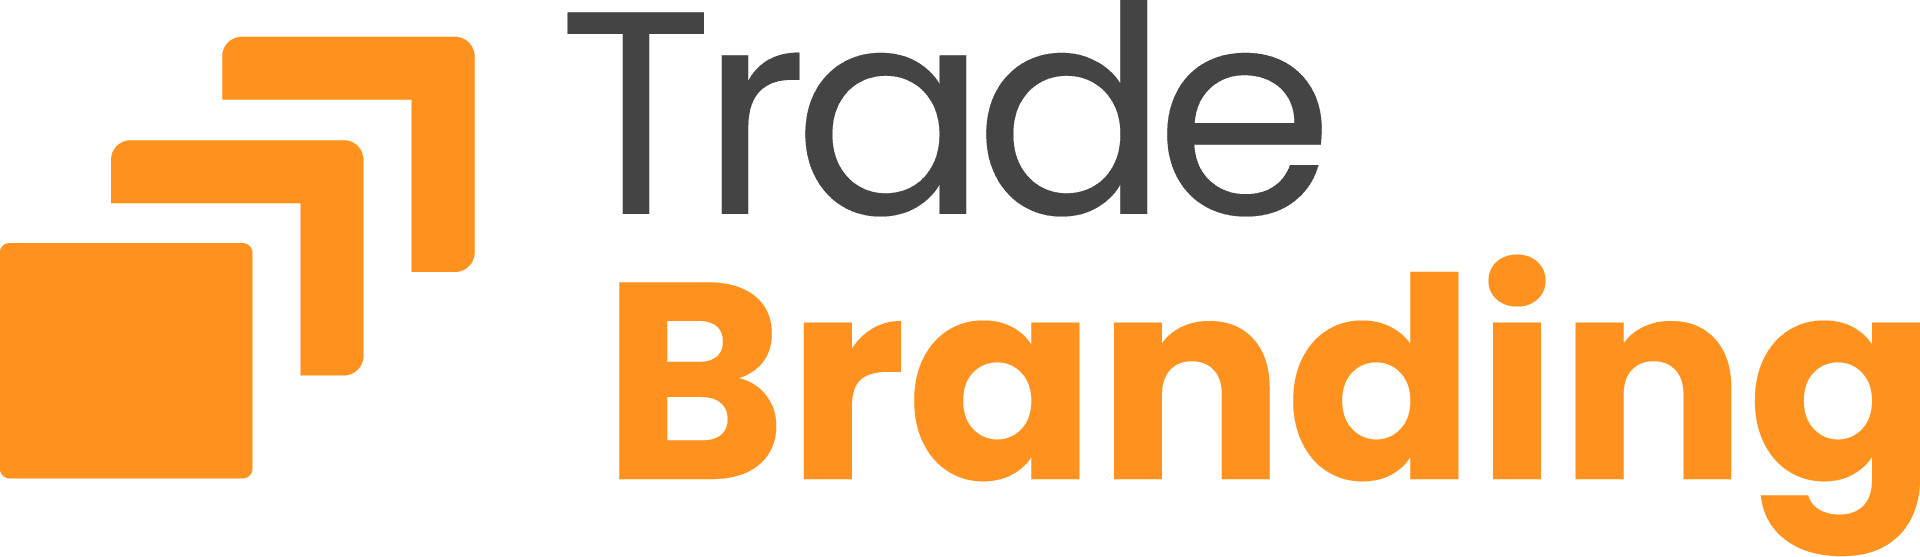 Trade Branding